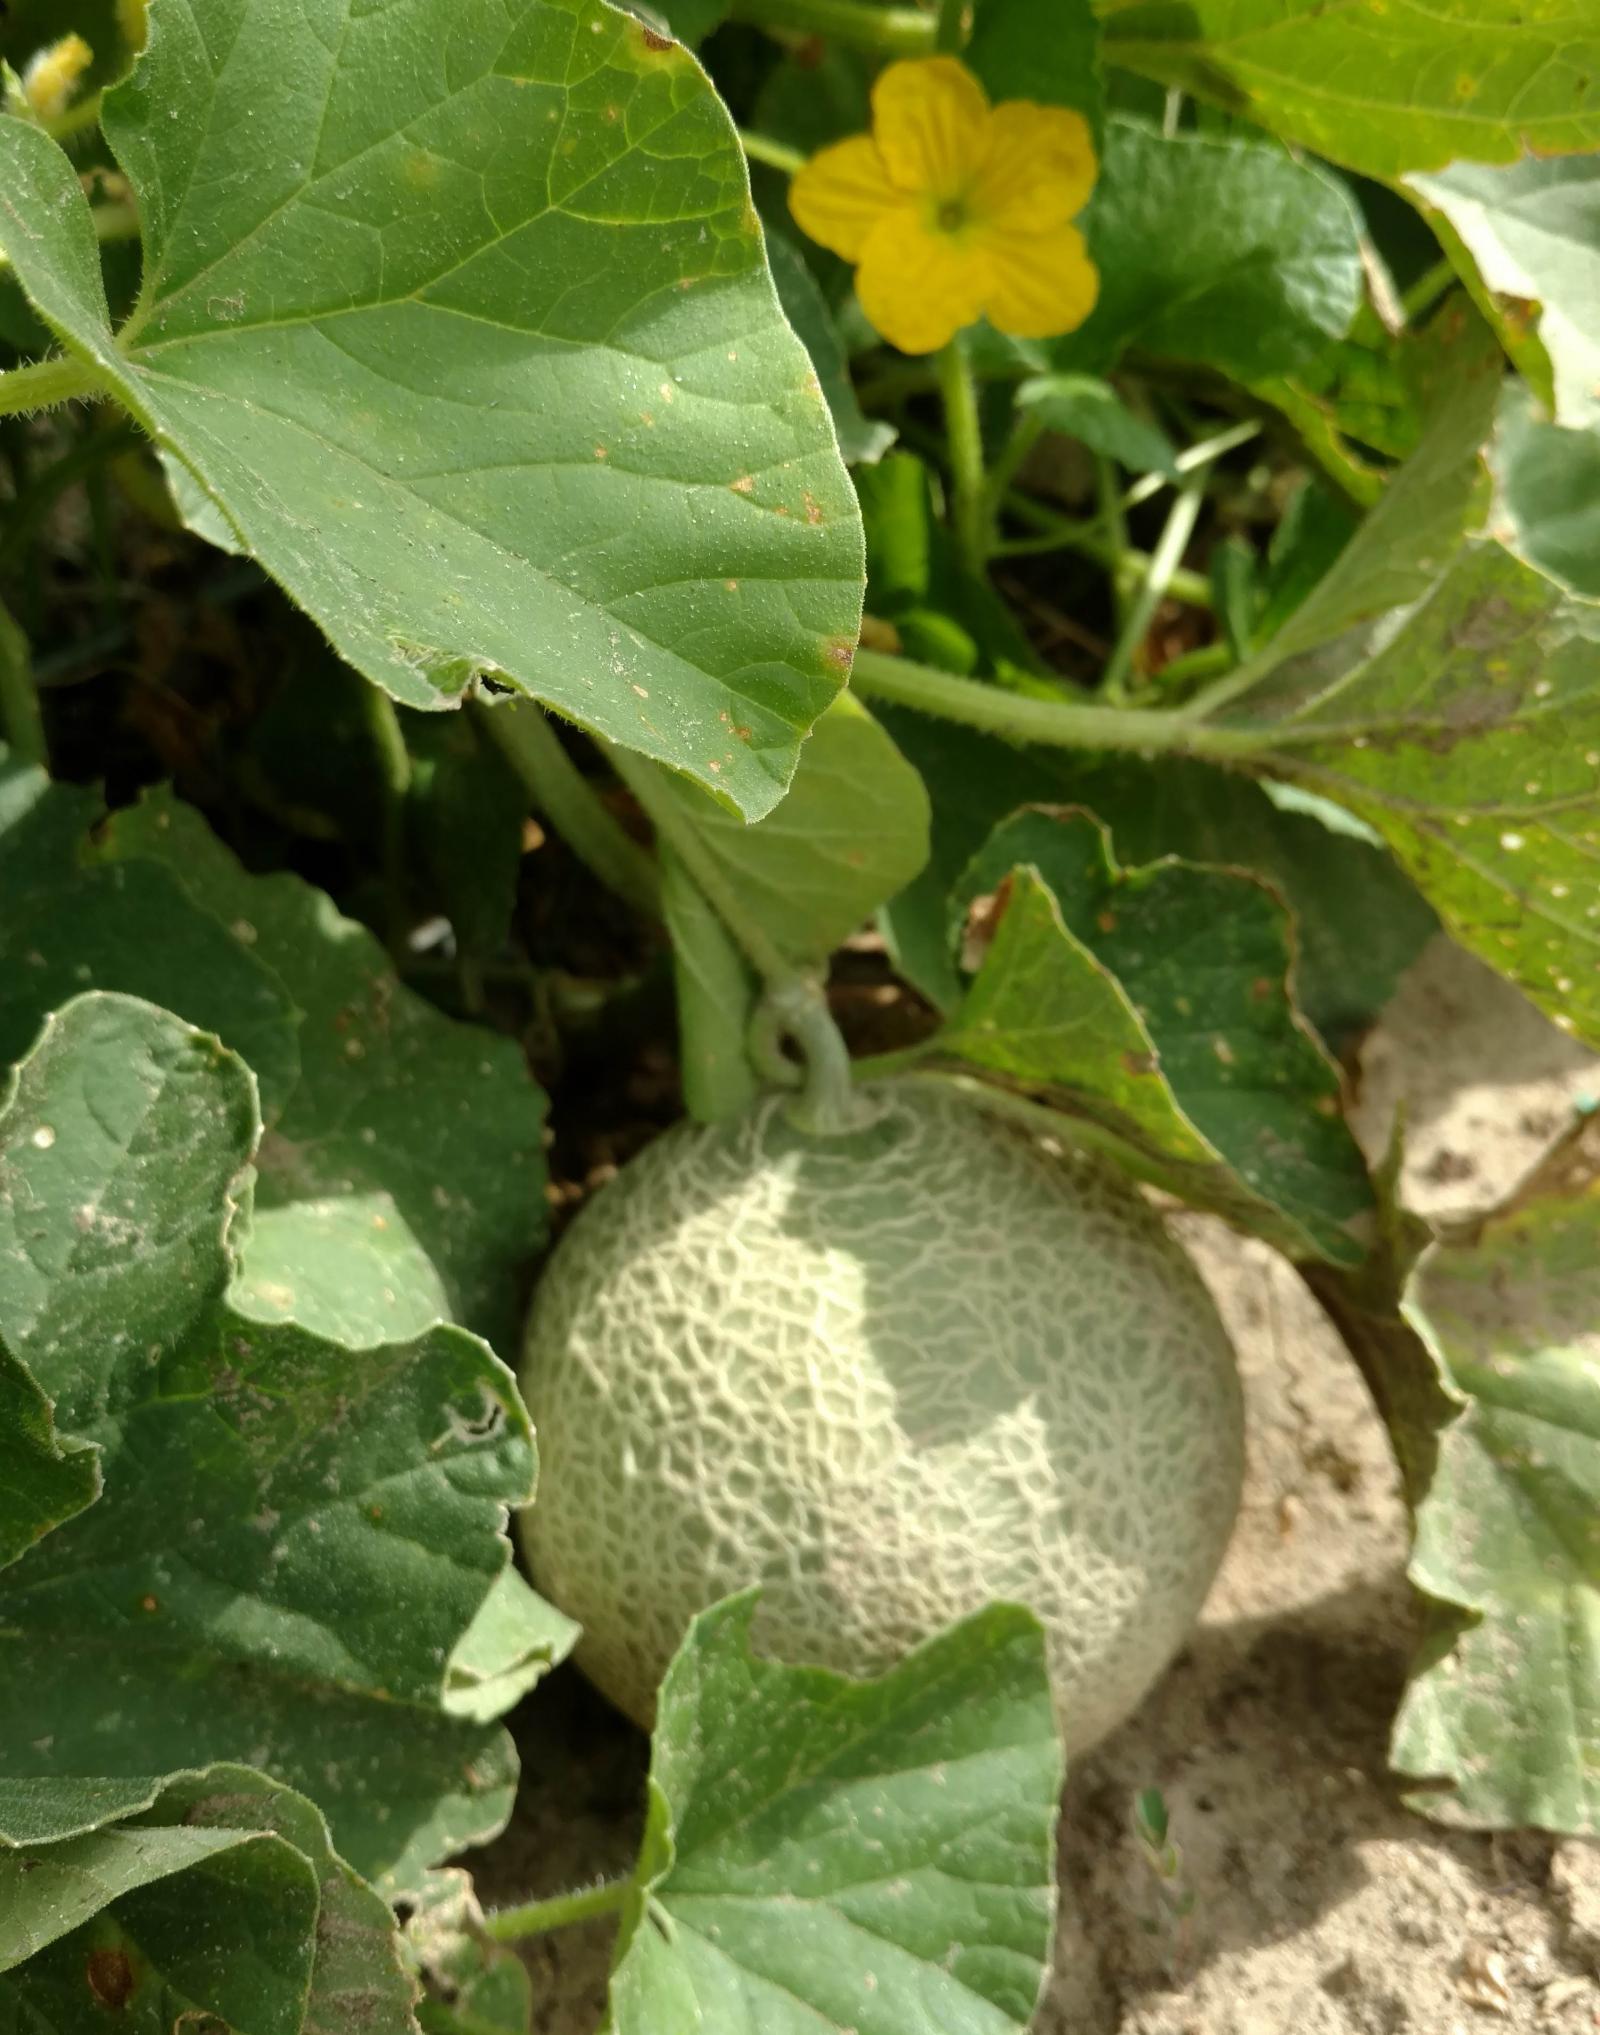 A cantaloupe on the vine